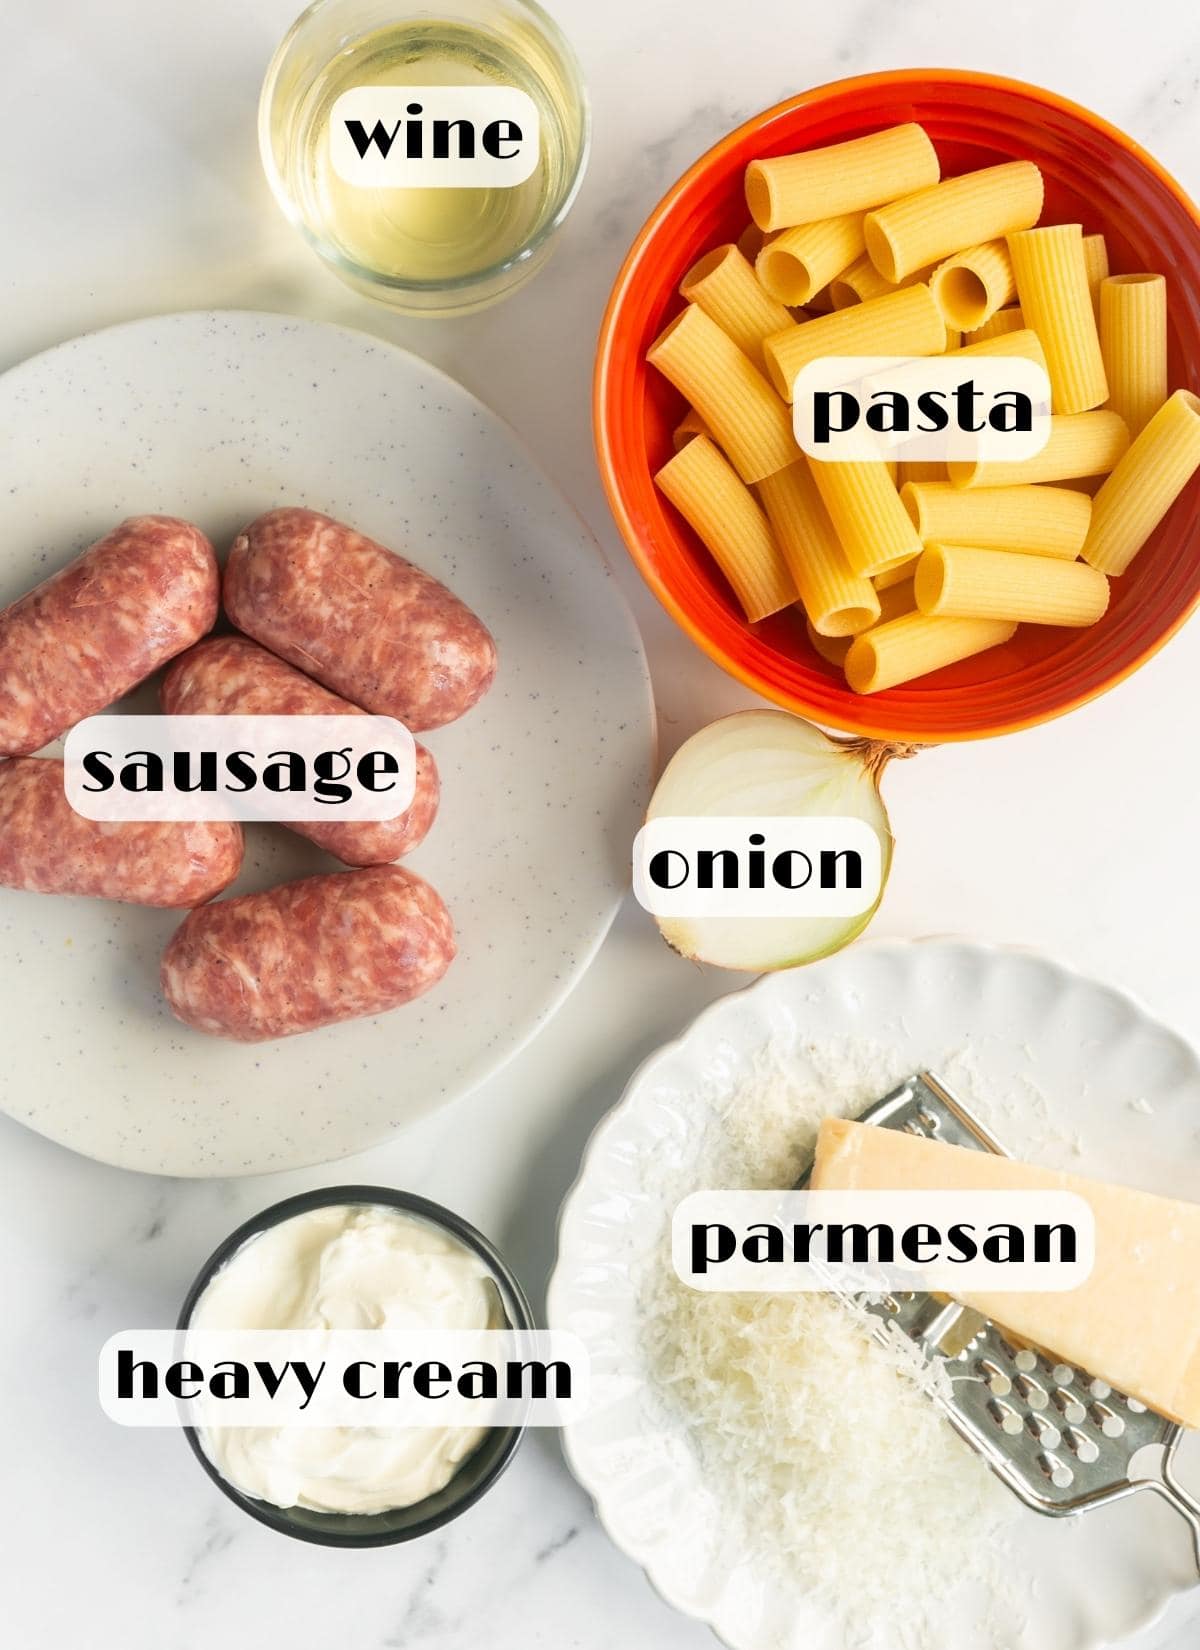 pasta alla norcina ingredients: sausage, pasta, heavy cream, pecorino cheese, onion, wine.